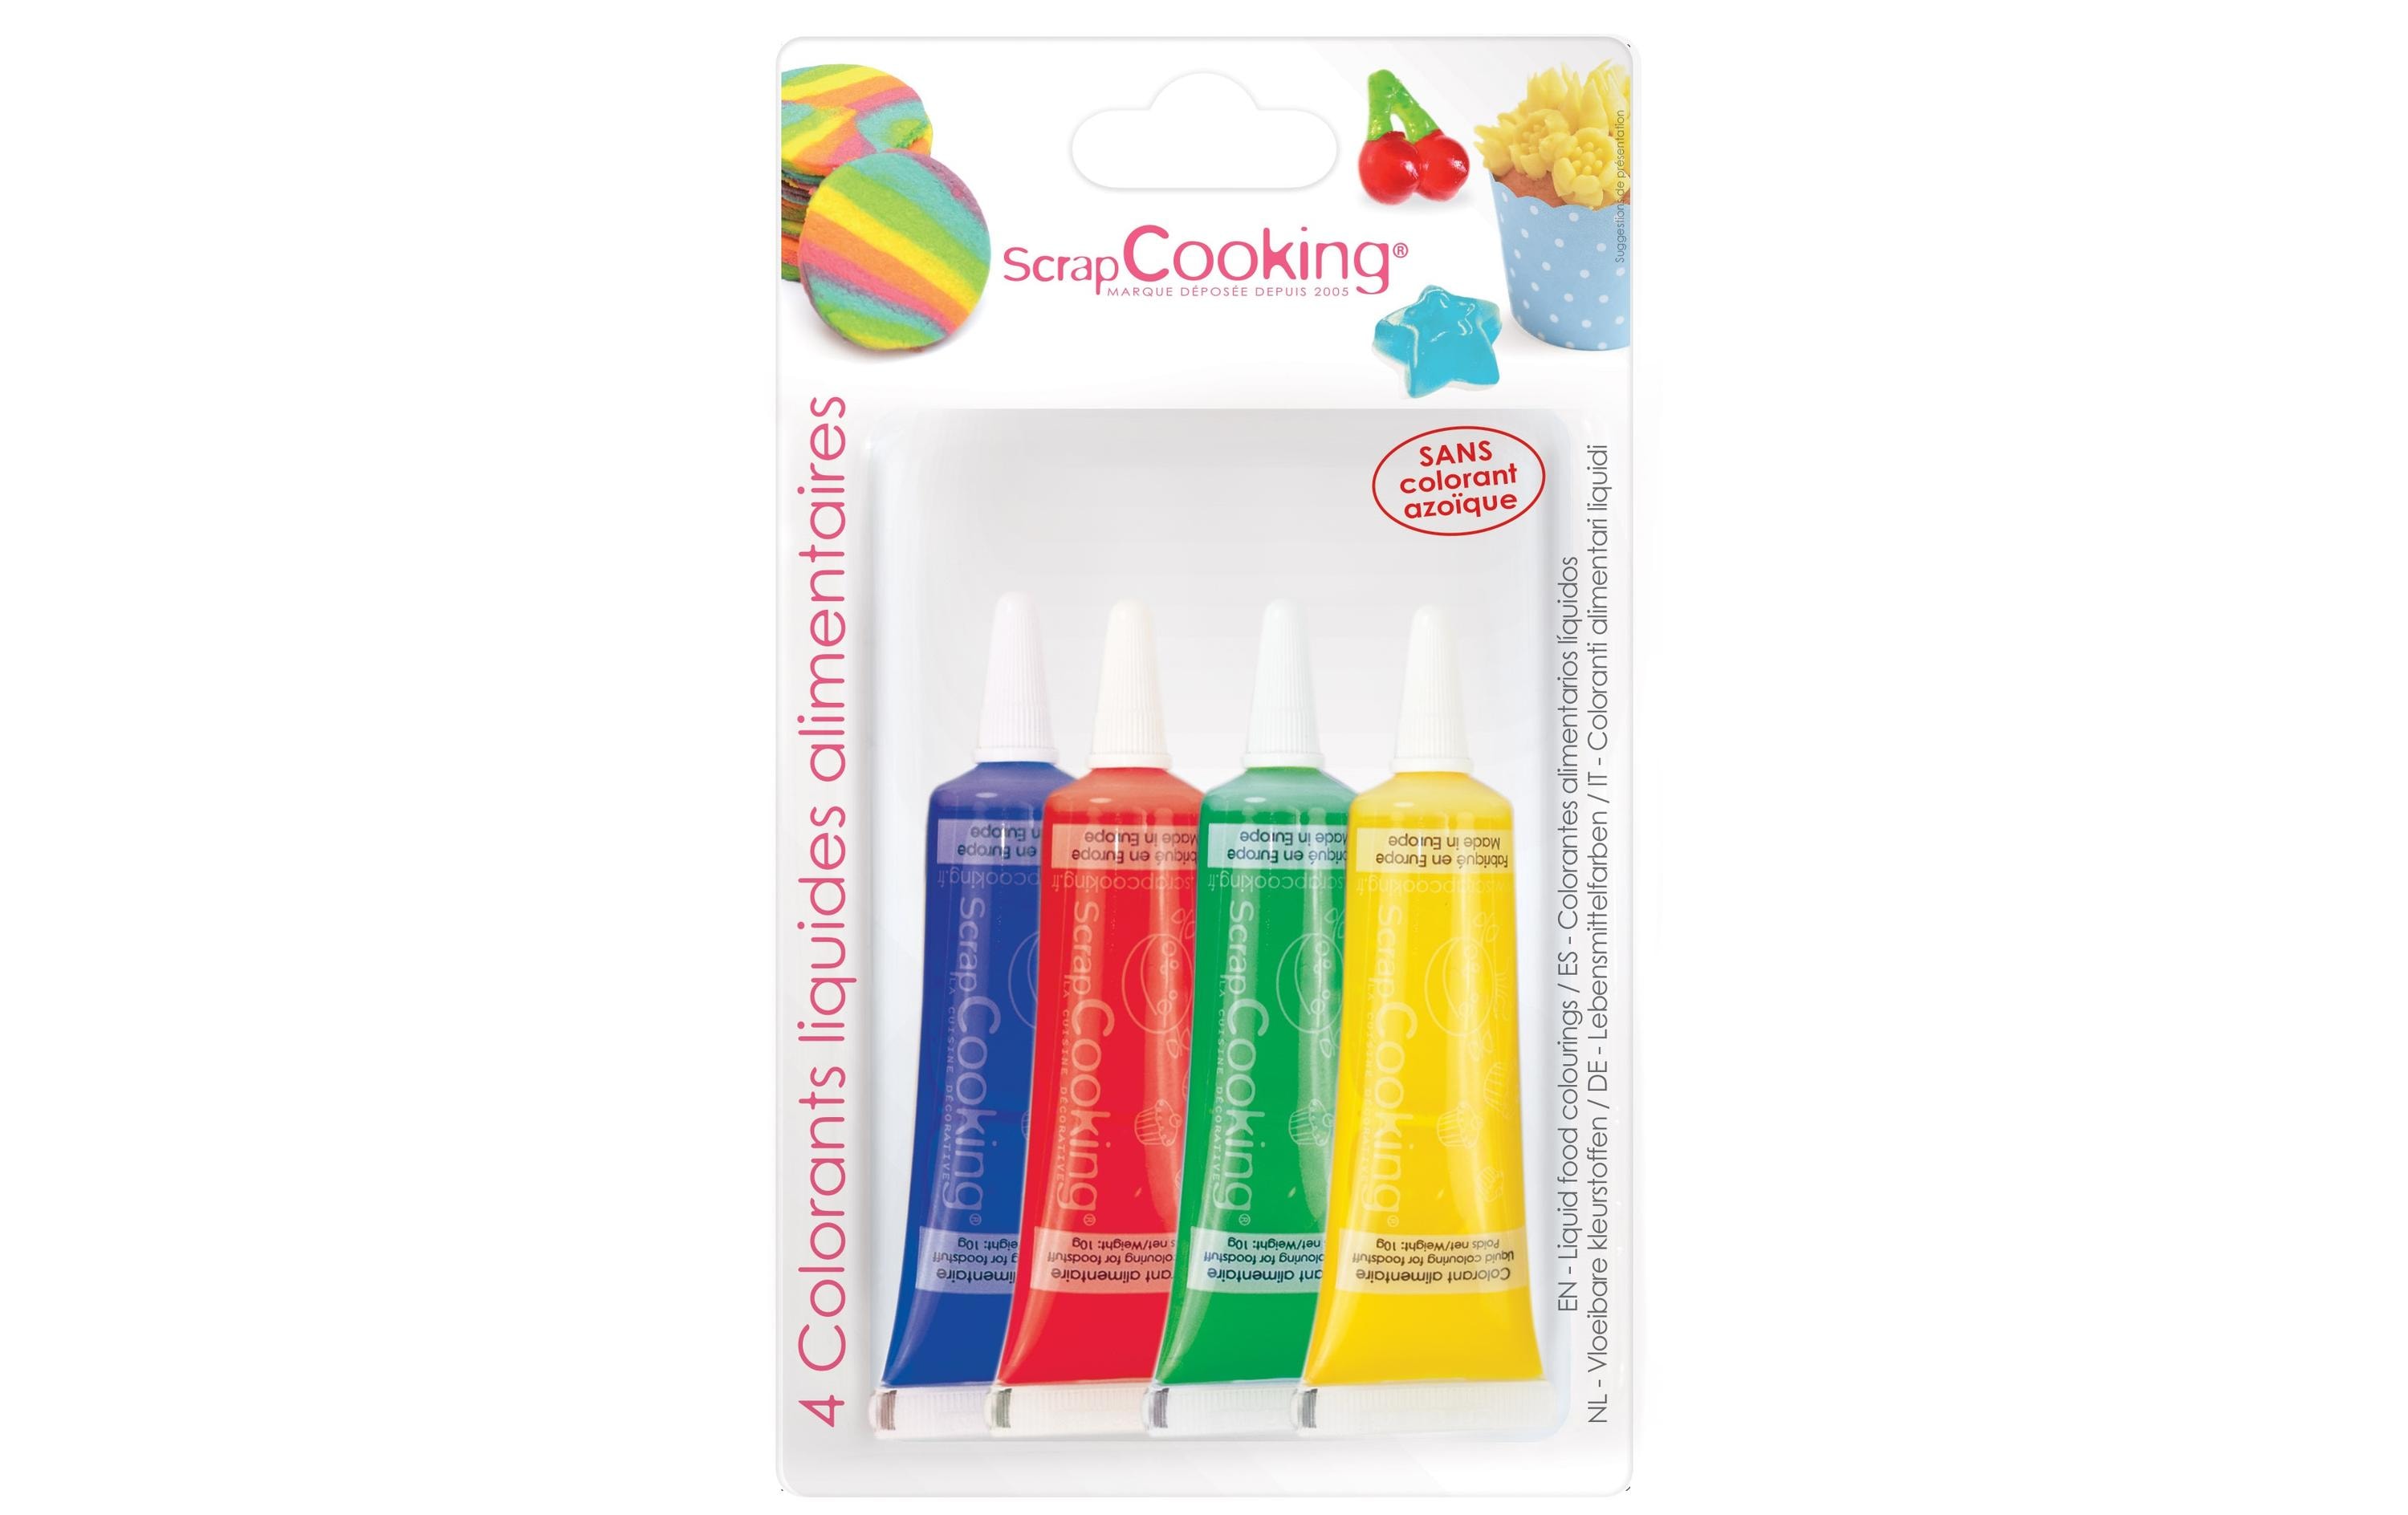 ScrapCooking Lebensmittelfarben-Set Blau/Gelb/Grün/Rot